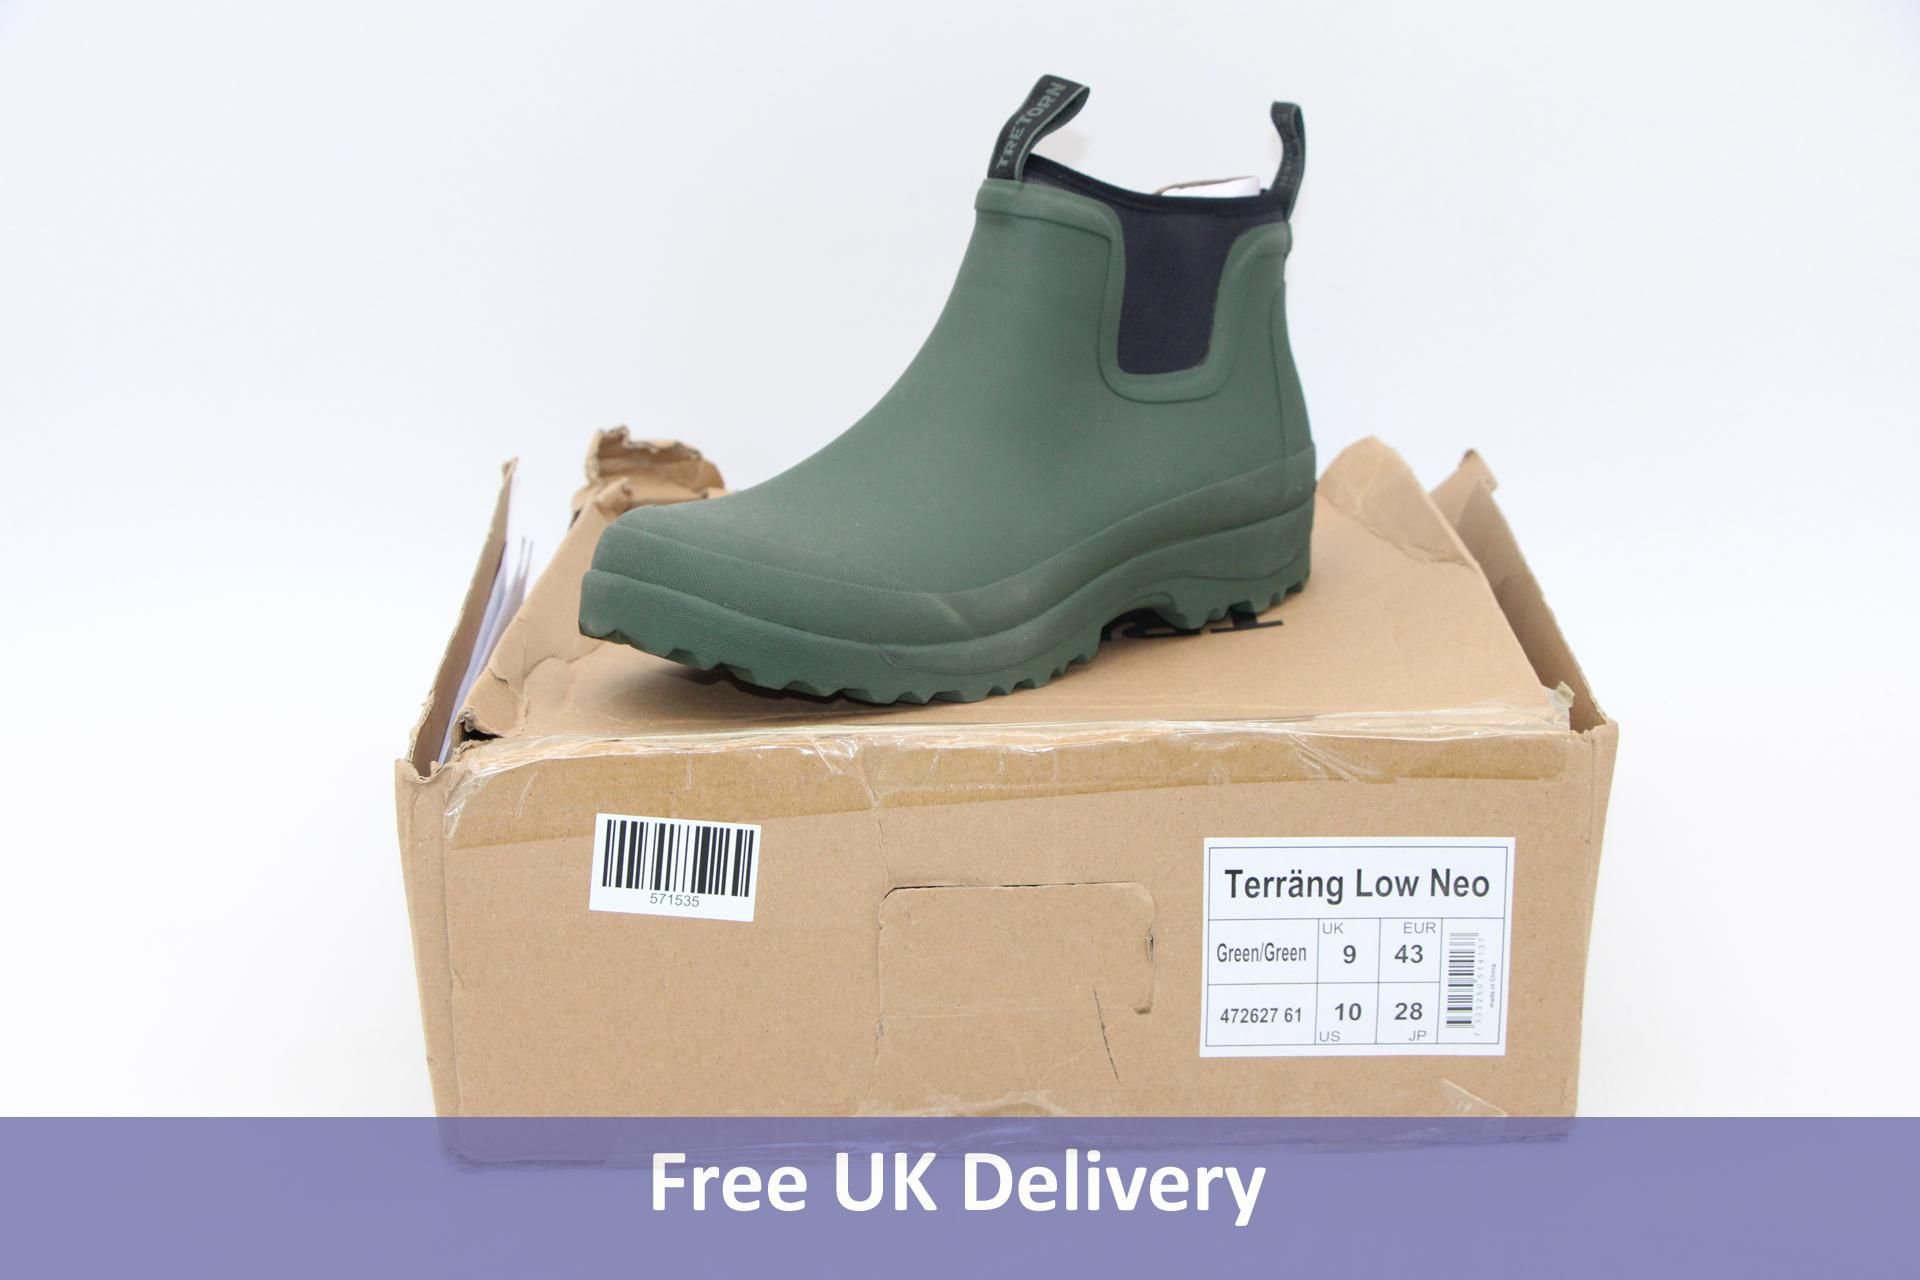 Tretorn Terrang Low Neo Rubber Boots, Green, UK 9. Box damaged